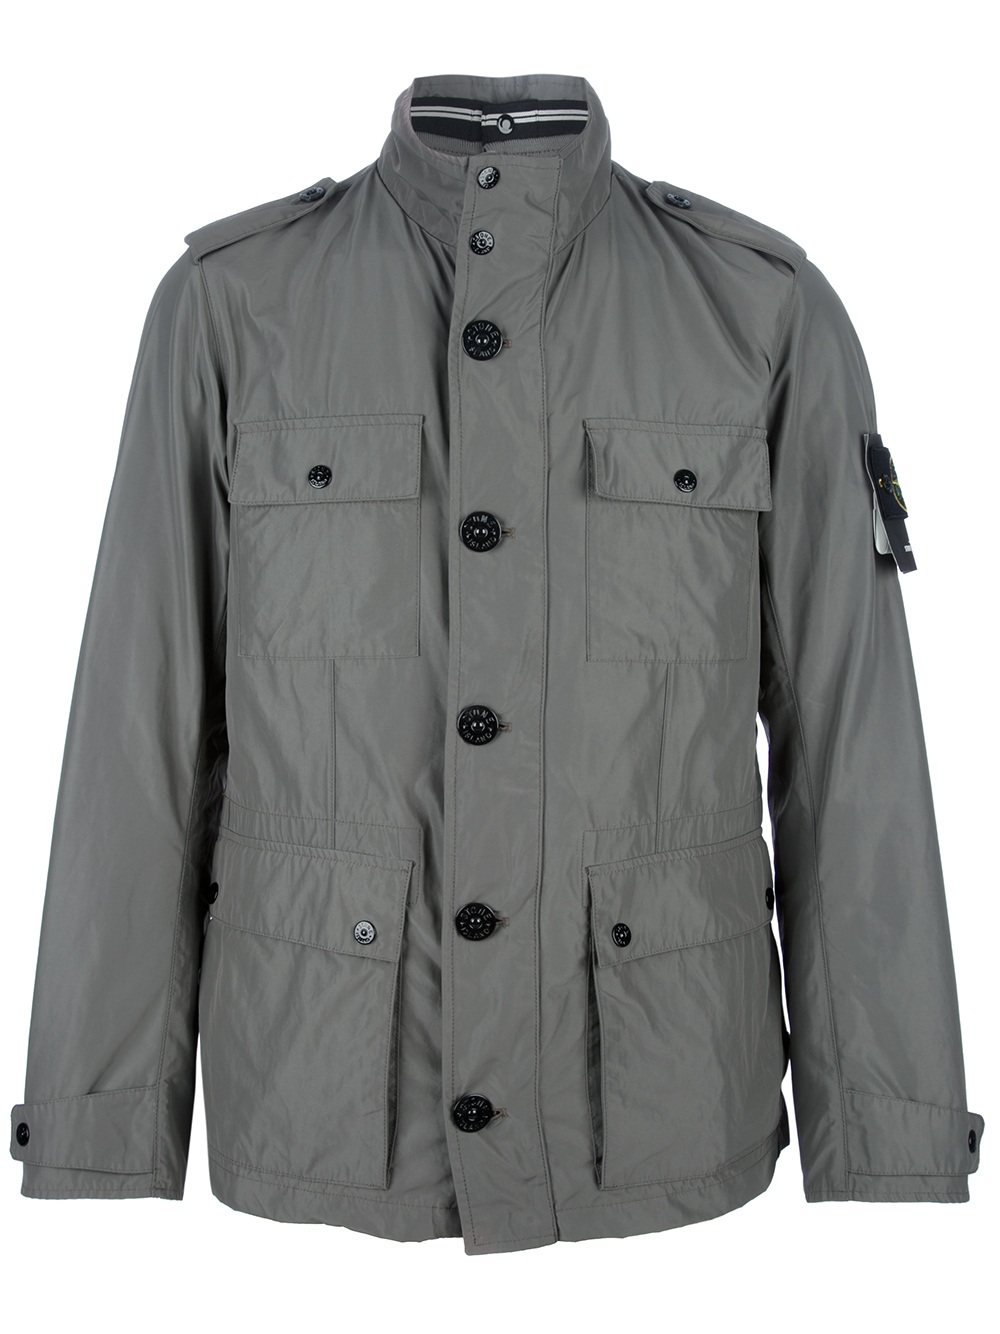 Stone Island Field Jacket in Grey (Grey) for Men - Lyst